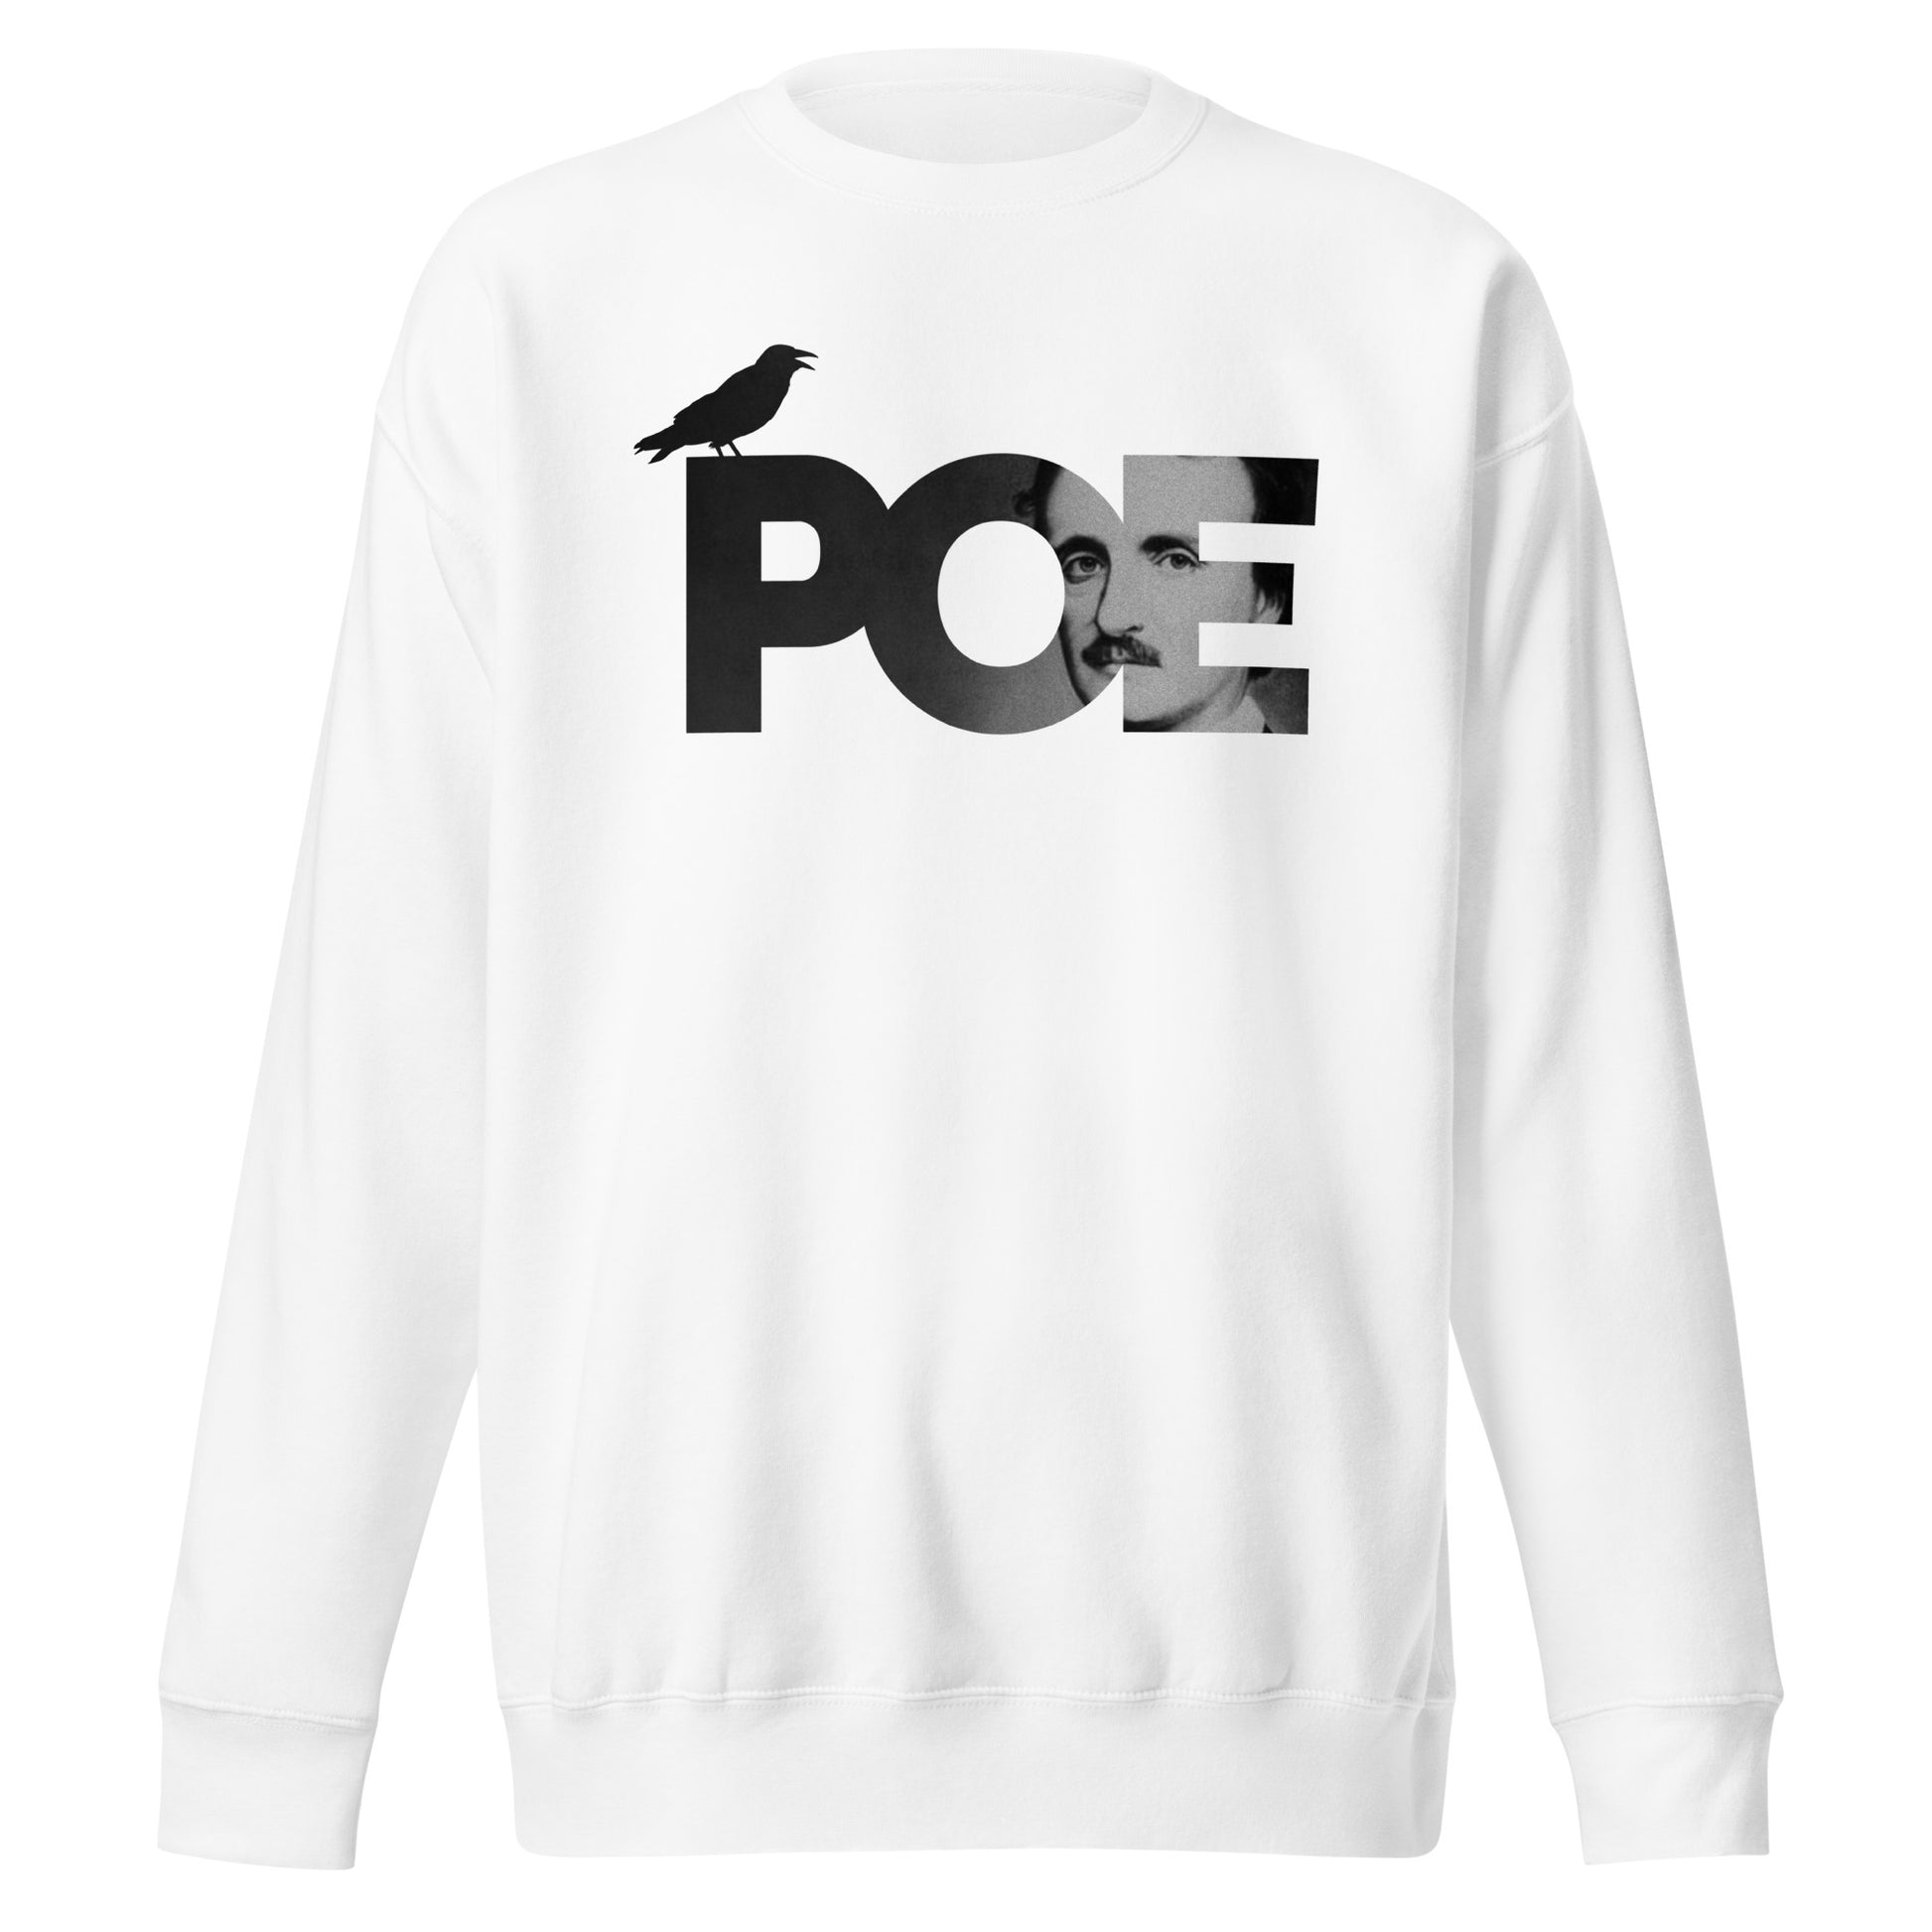 Men's Edgar Allan Poe "Poe" Unisex Premium Sweatshirt - White Front